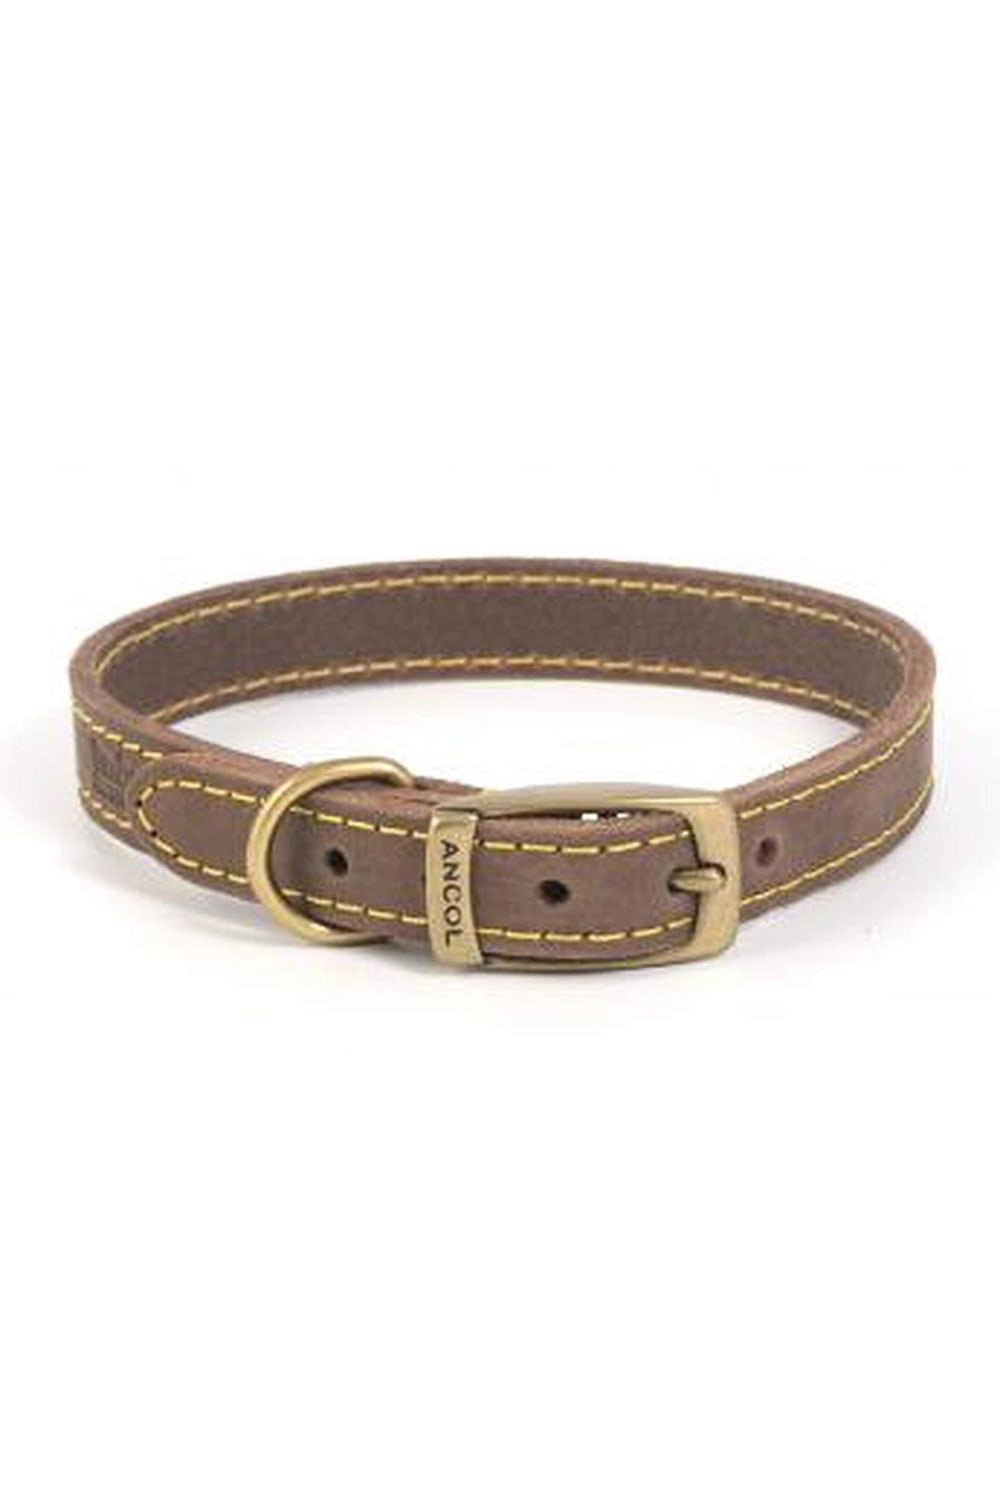 Ancol Timberwolf Leather Dog Collar (16in)